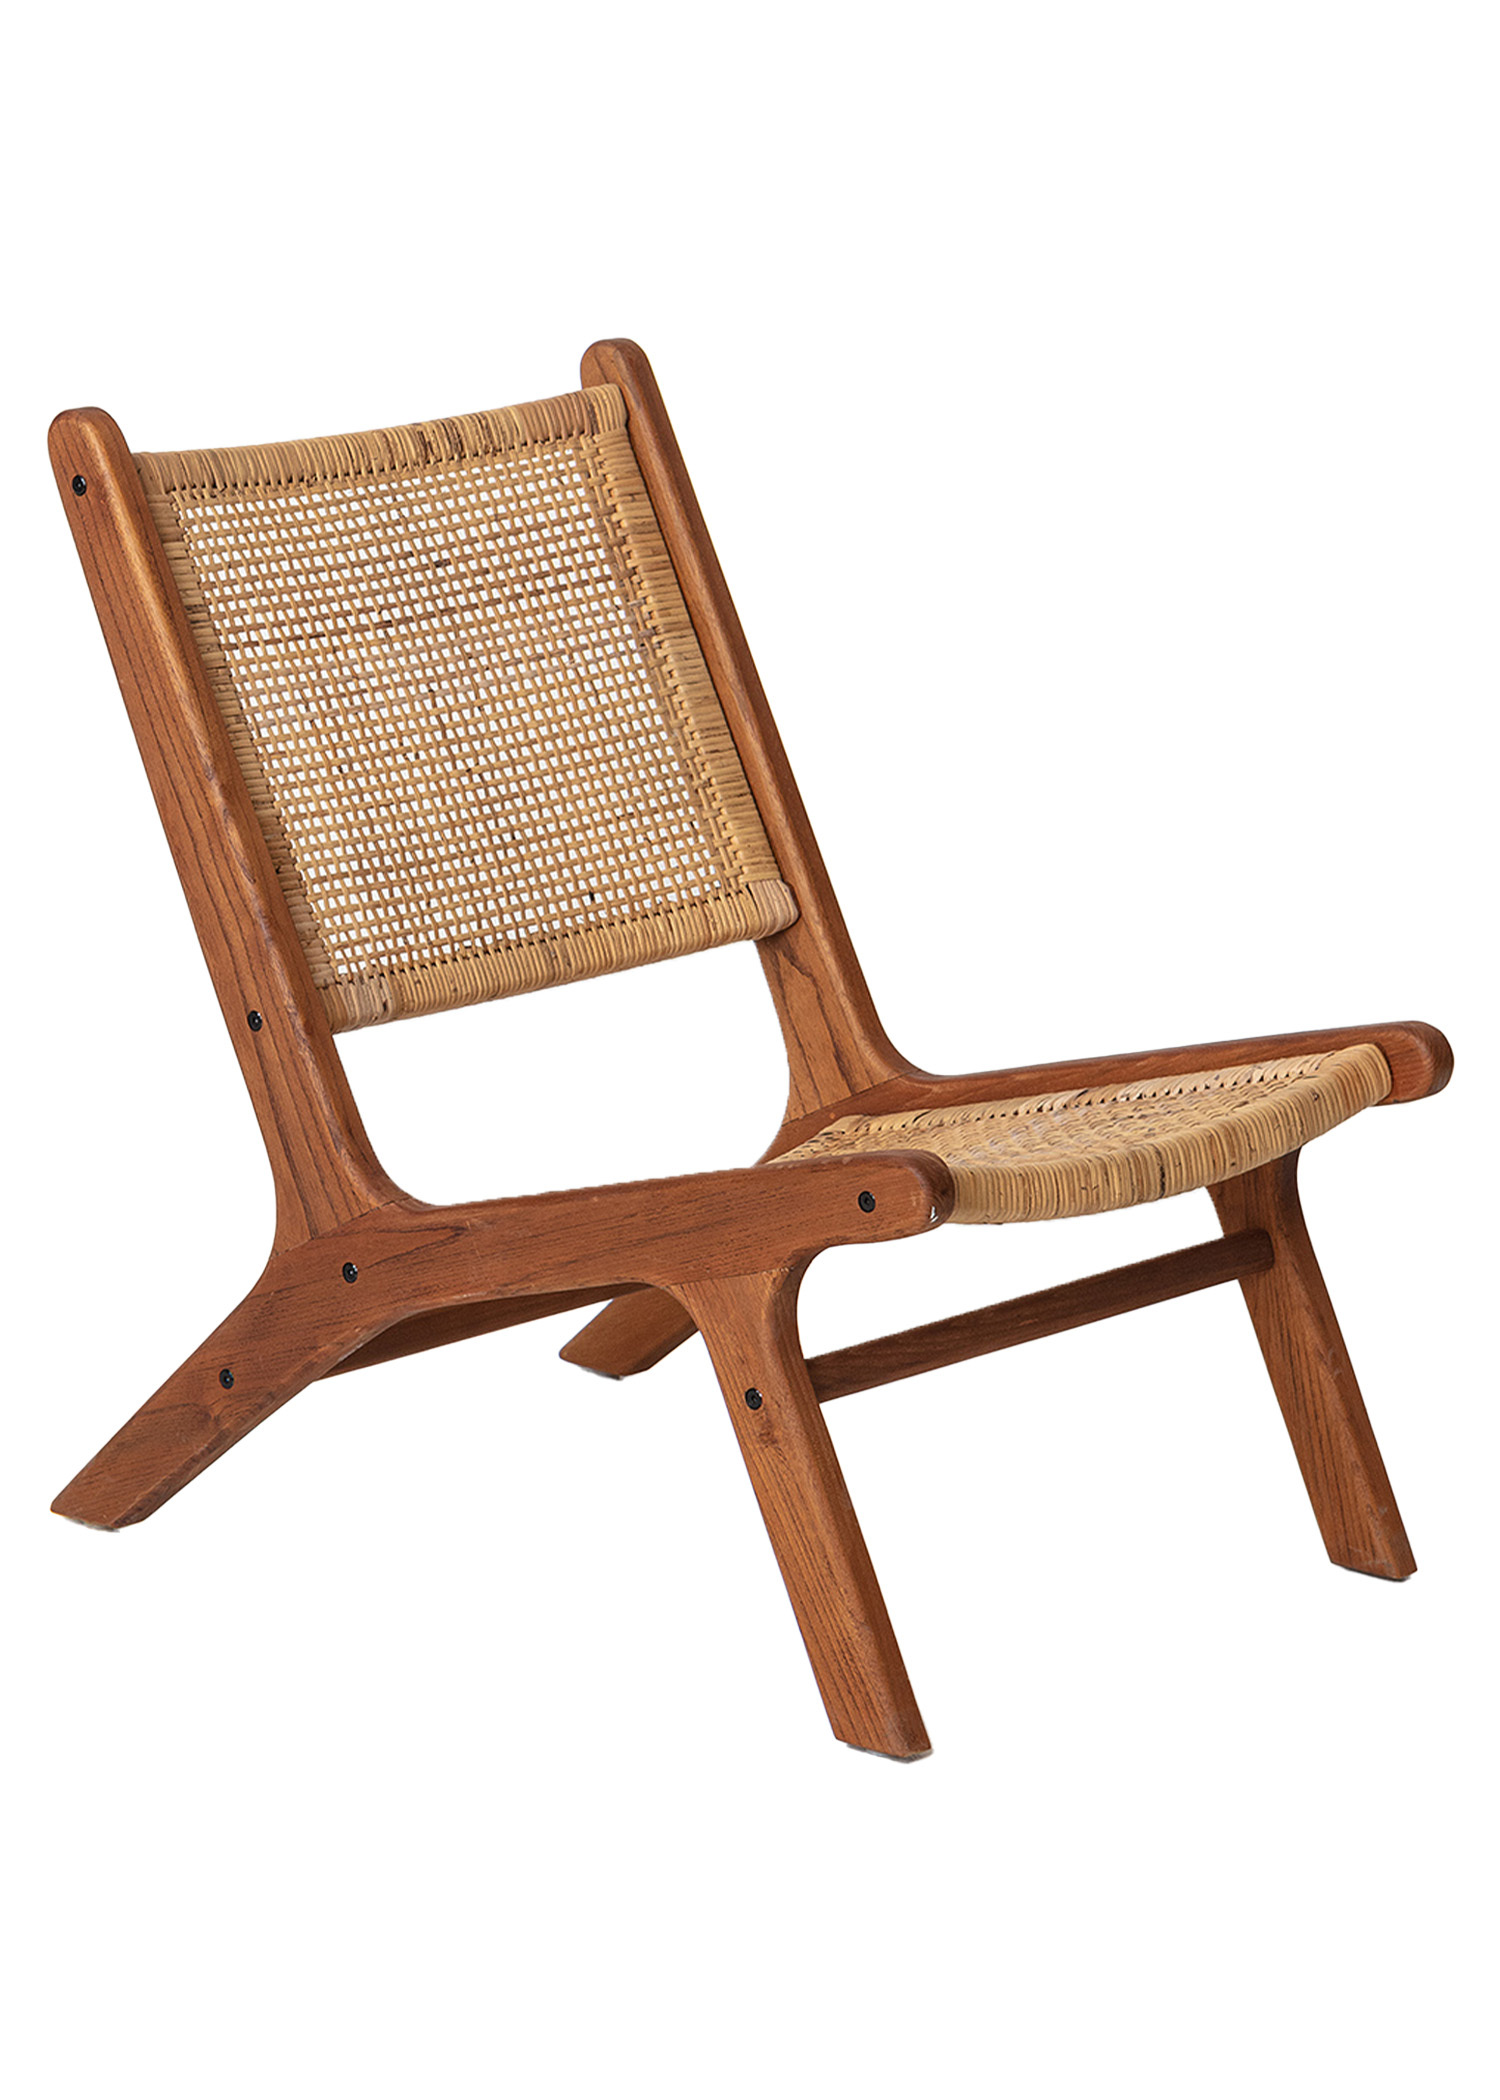 Handmade rattan chair Image 0